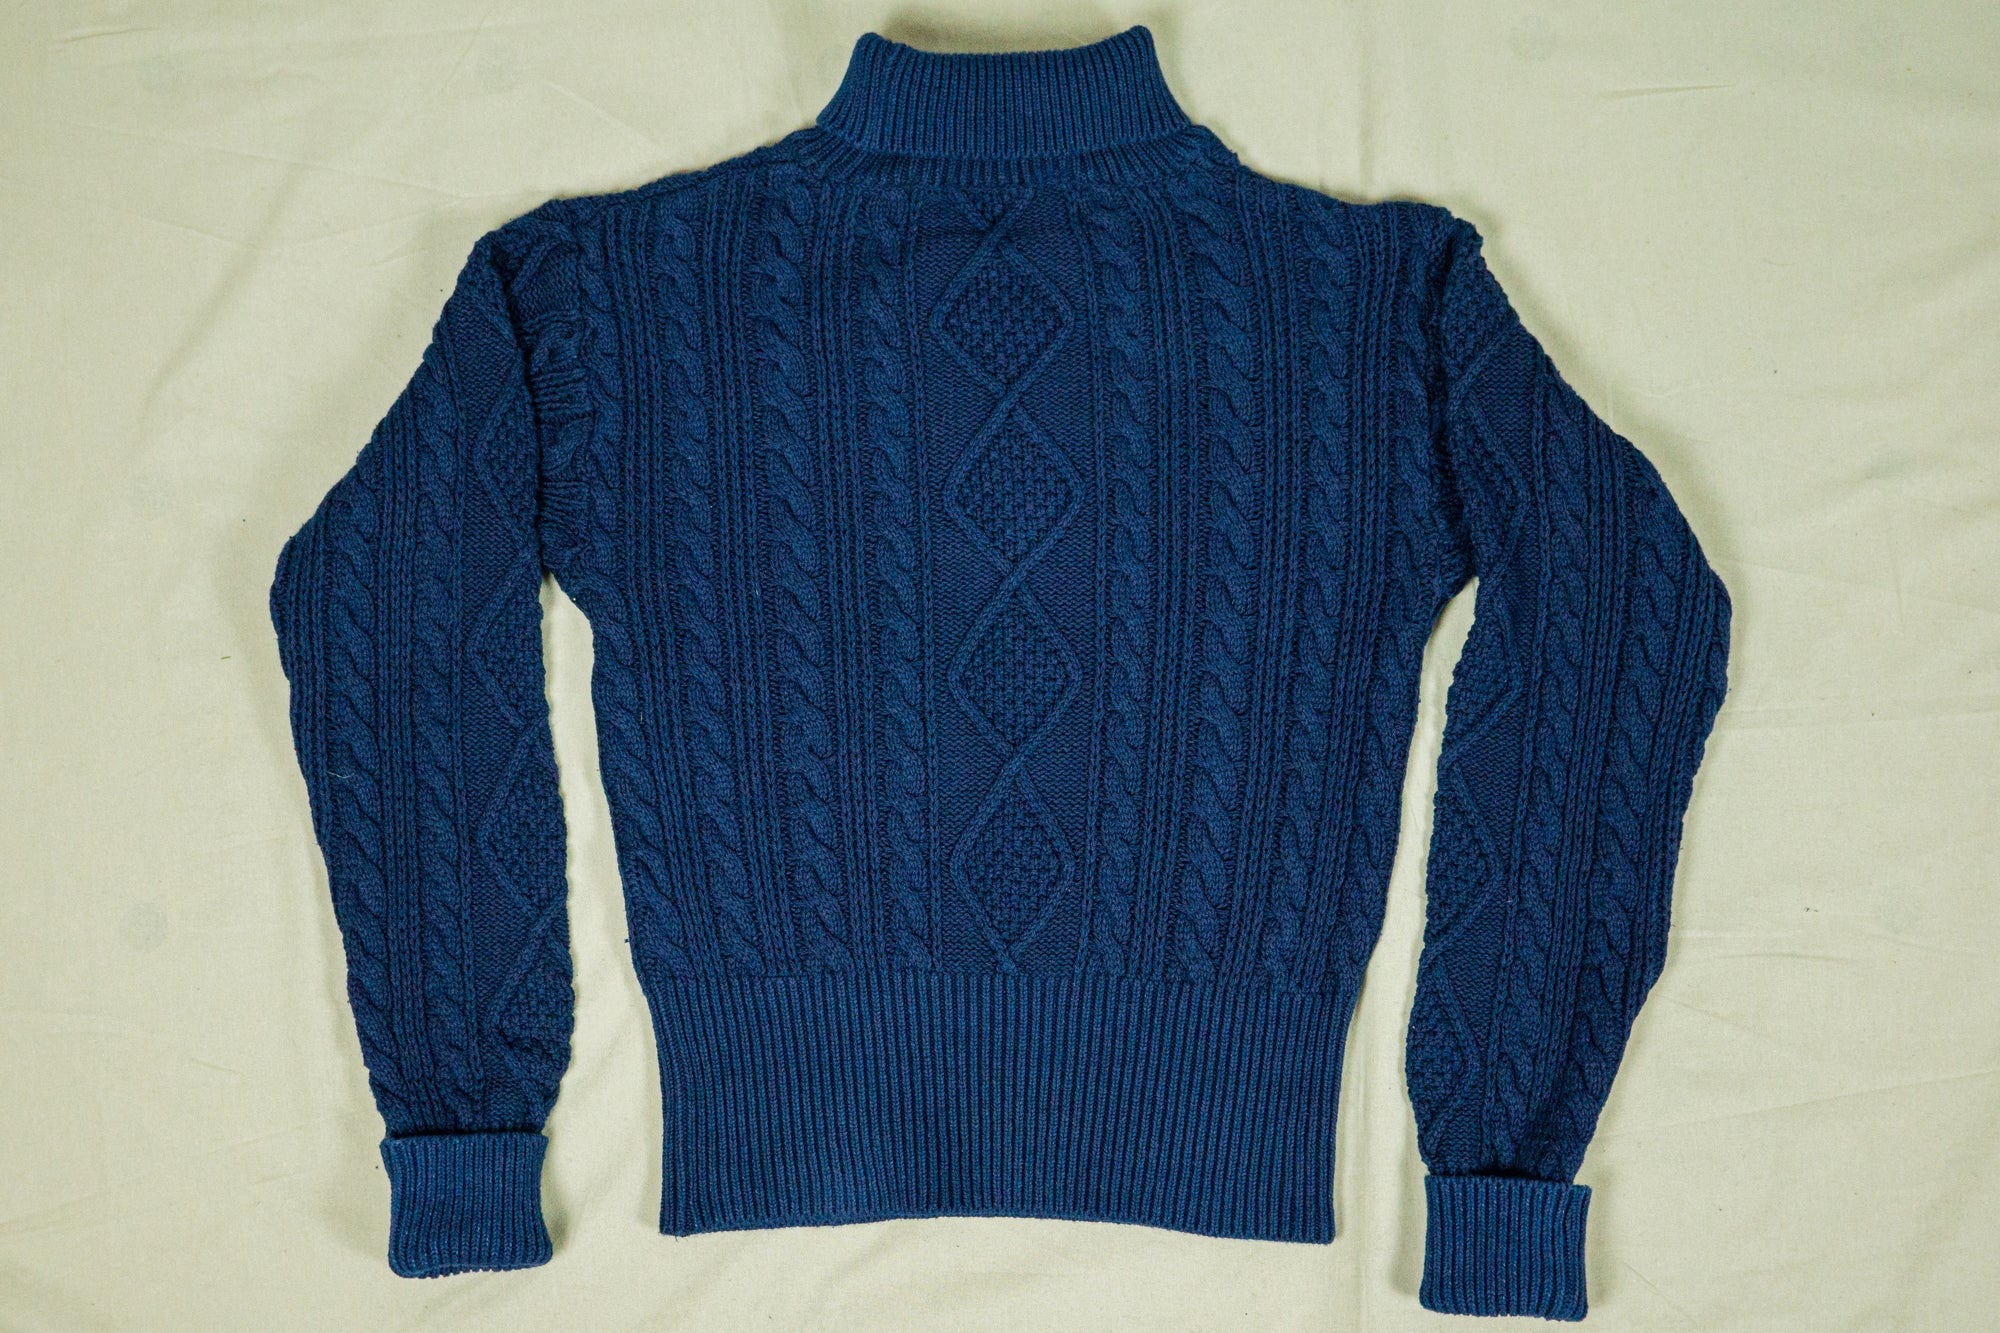 Mister Freedom Mariner Sweater Roll-Neck - Indigo